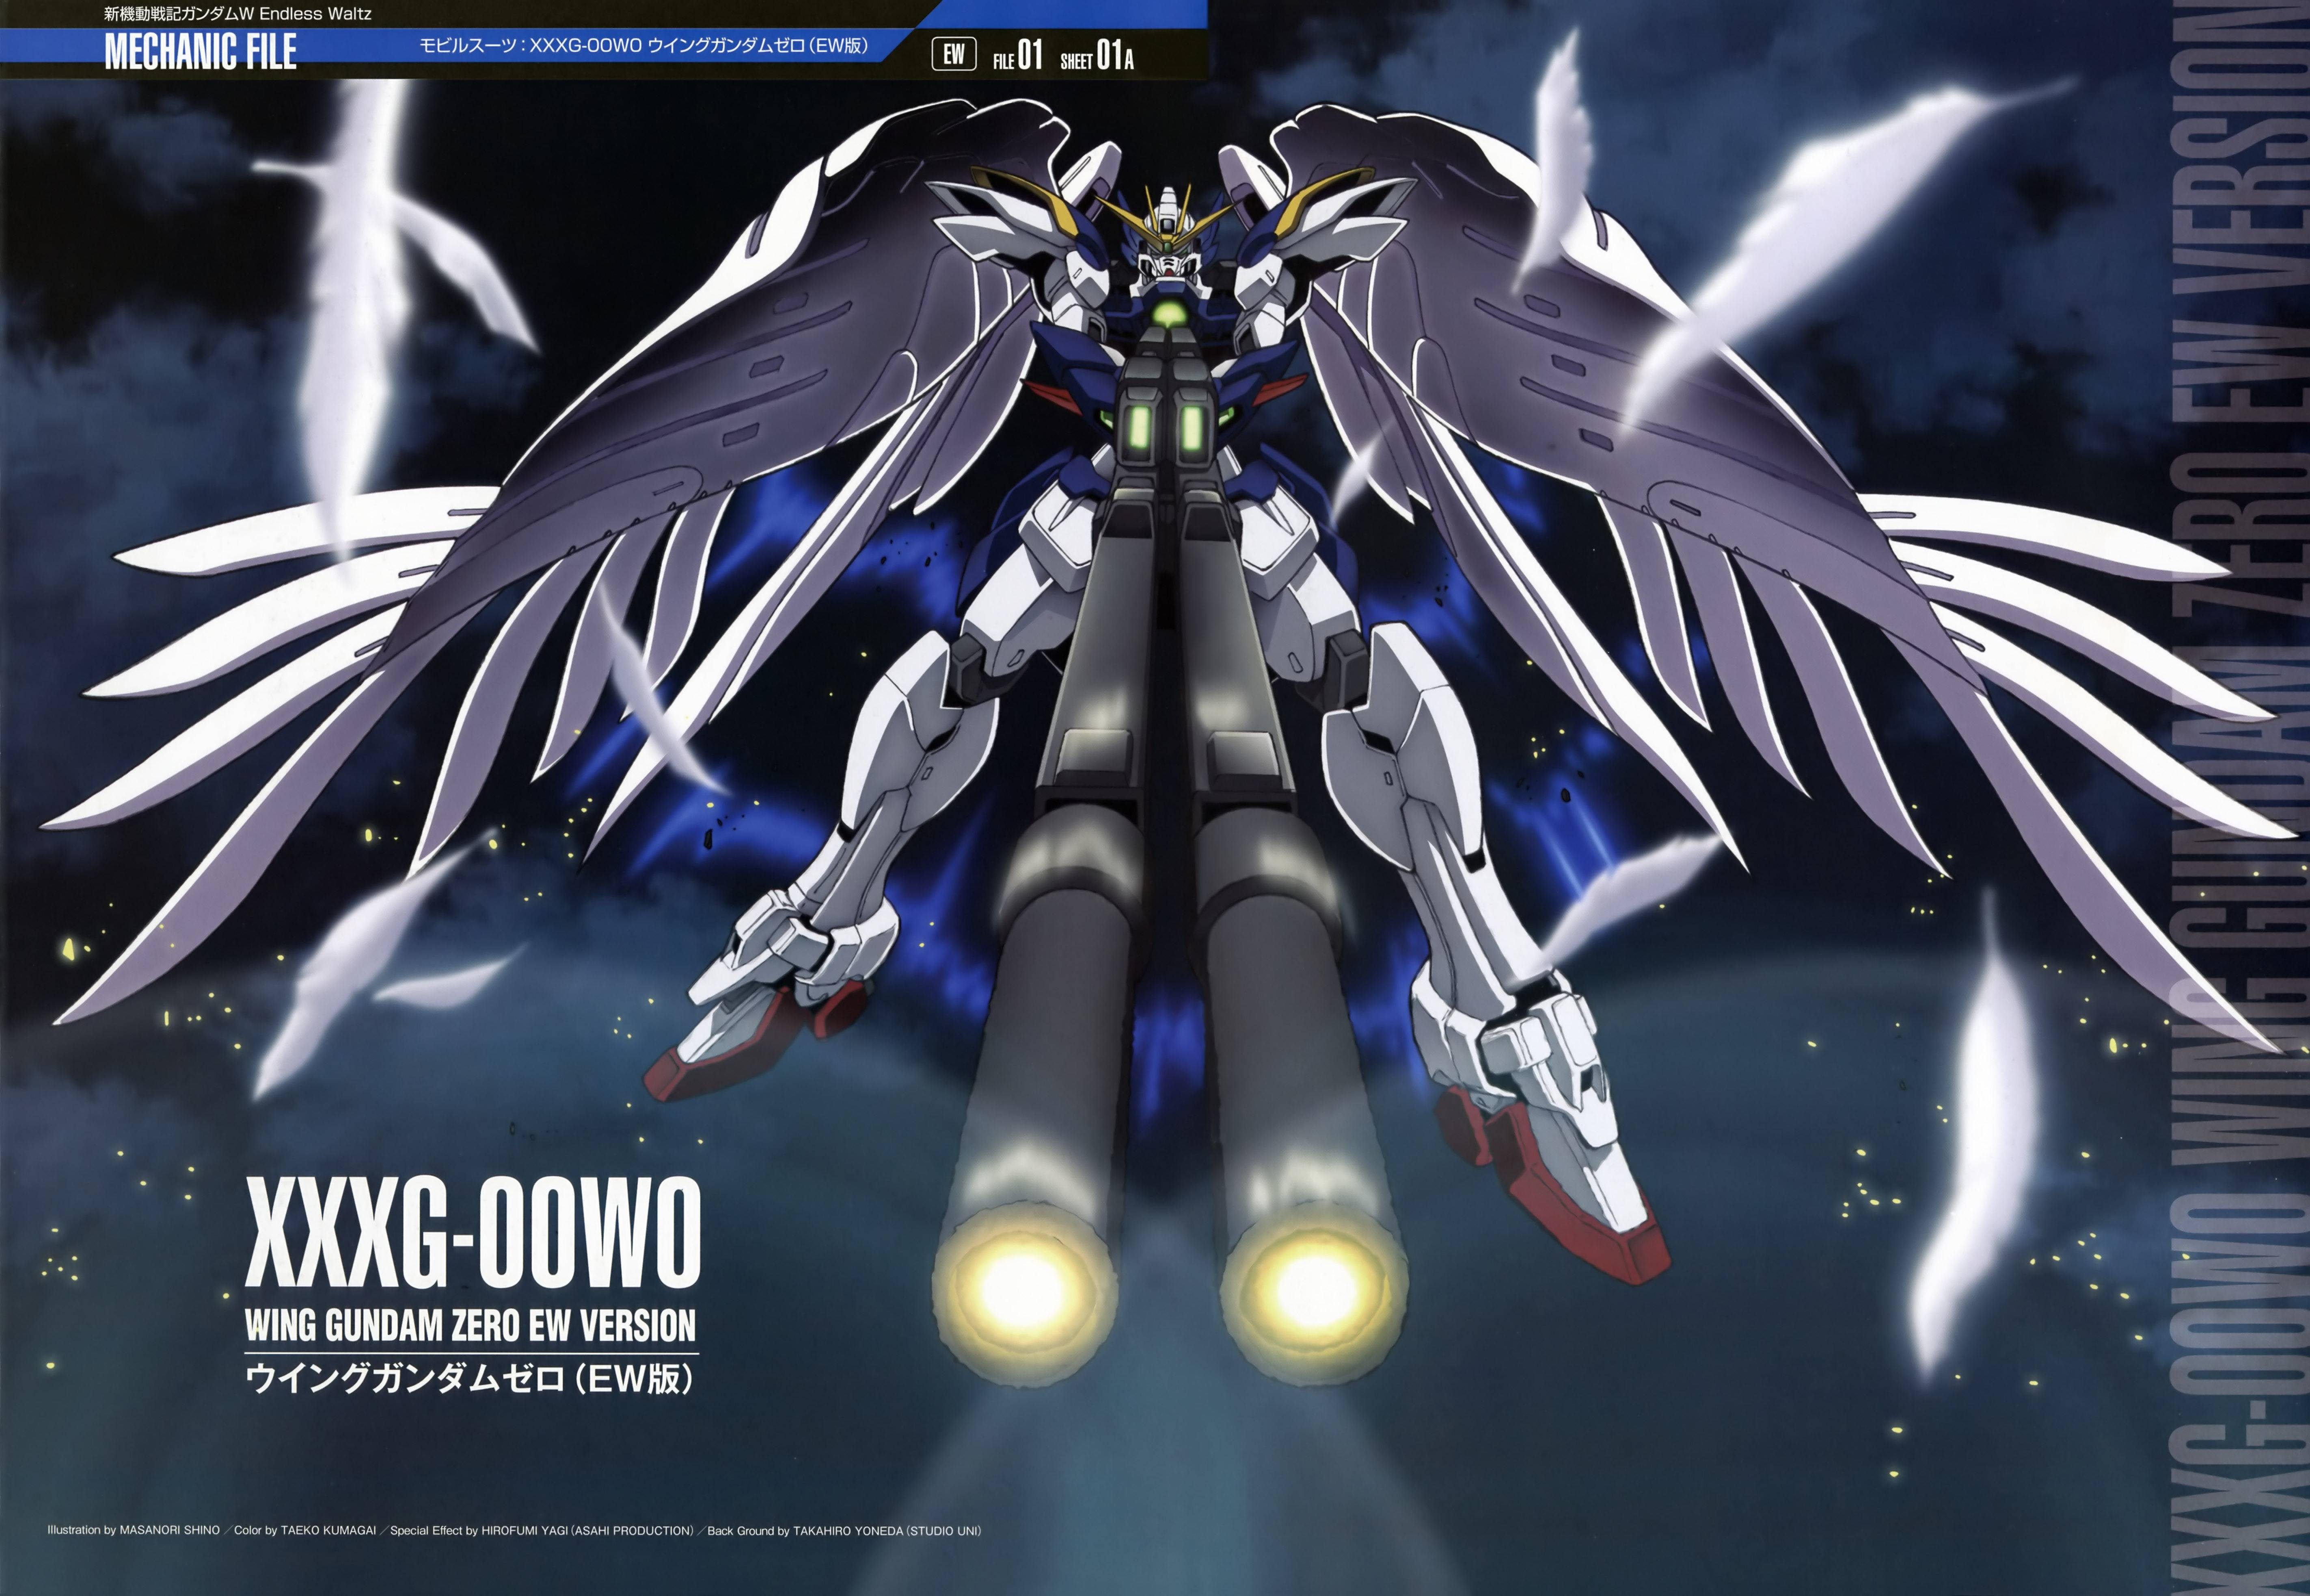 Anime 5690x3932 anime Gundam mechs Super Robot Taisen Mobile Suit Gundam Wing Wing Gundam Zero artwork digital art